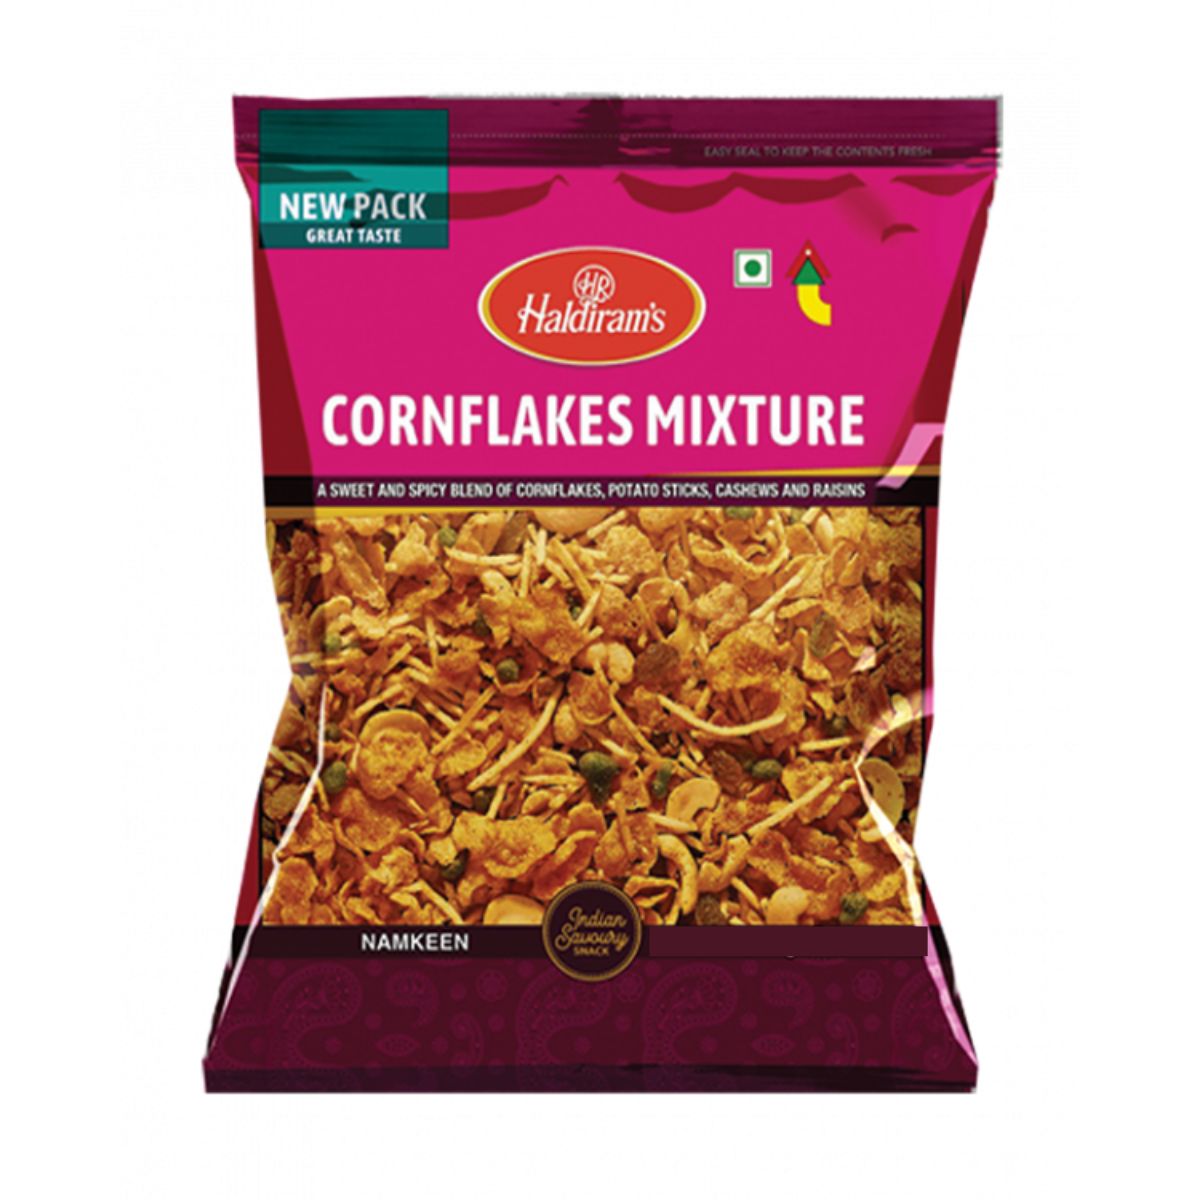 Haldiram's Cornflakes Mixture - A Sweet And Spicy Blend Of Cornflakes, Potato Sticks, Cashews And Raisins - 400g